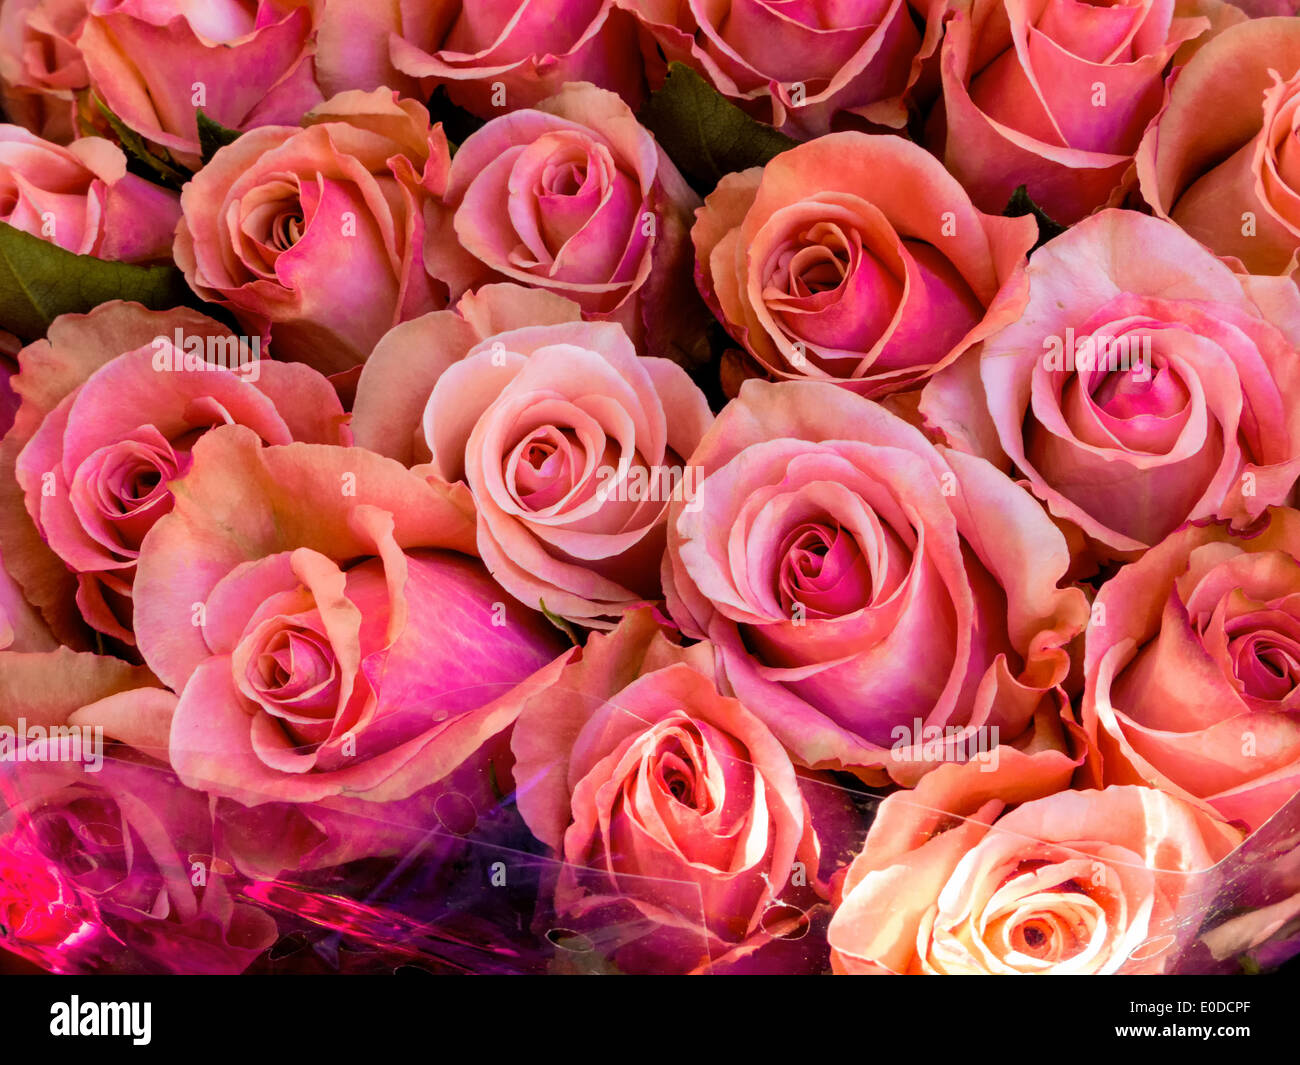 Molte le rose rosa in un mercato dei fiori di attendere per un acquirente, Viele rosa Rosen auf einem Blumenmarkt warten auf einen Kaeufer Foto Stock